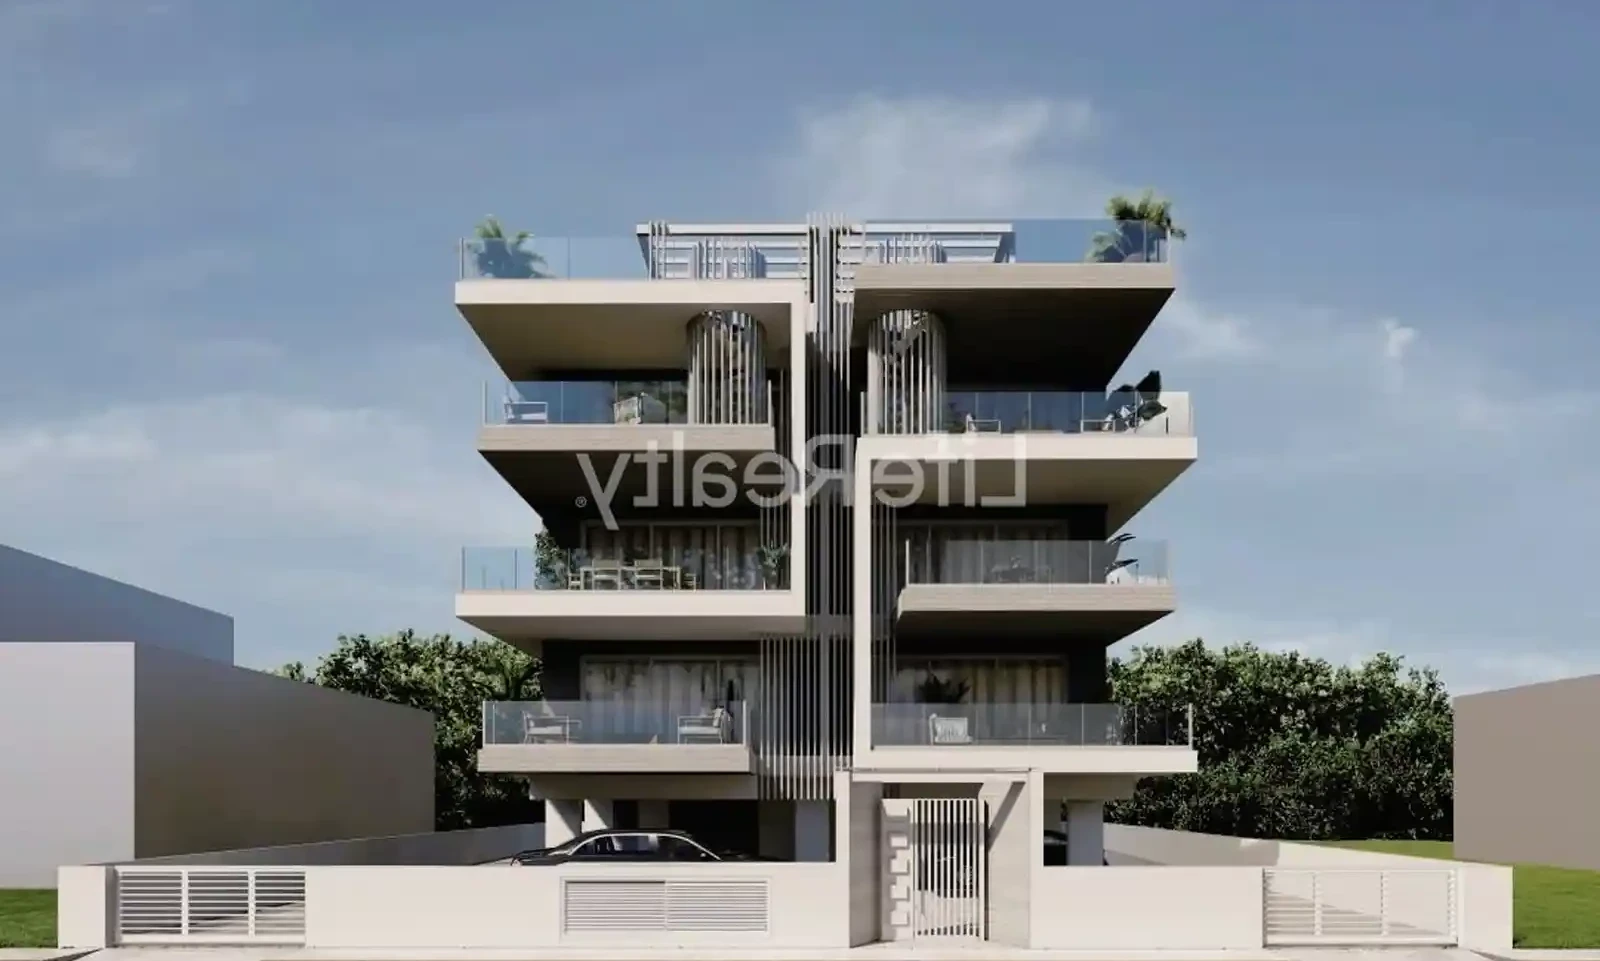 2-bedroom penthouse fоr sаle €345.000, image 1